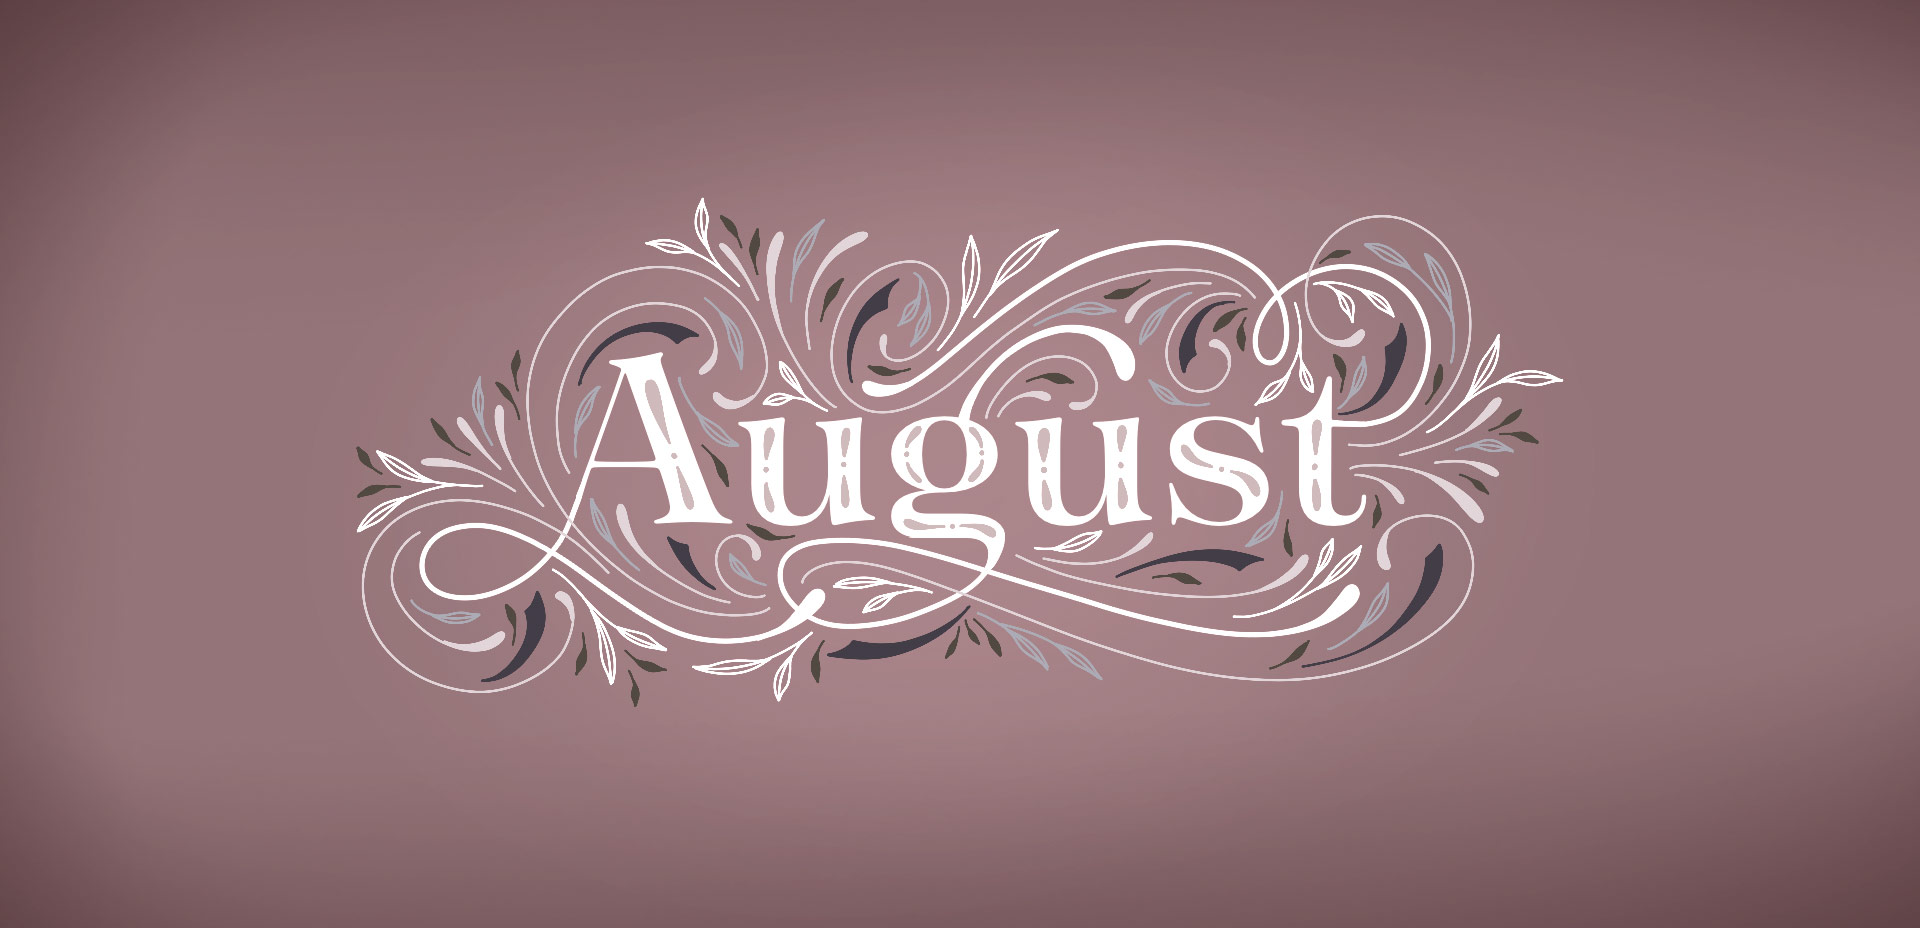 Freebie: August 2019 Desktop Wallpapers - Every-Tuesday